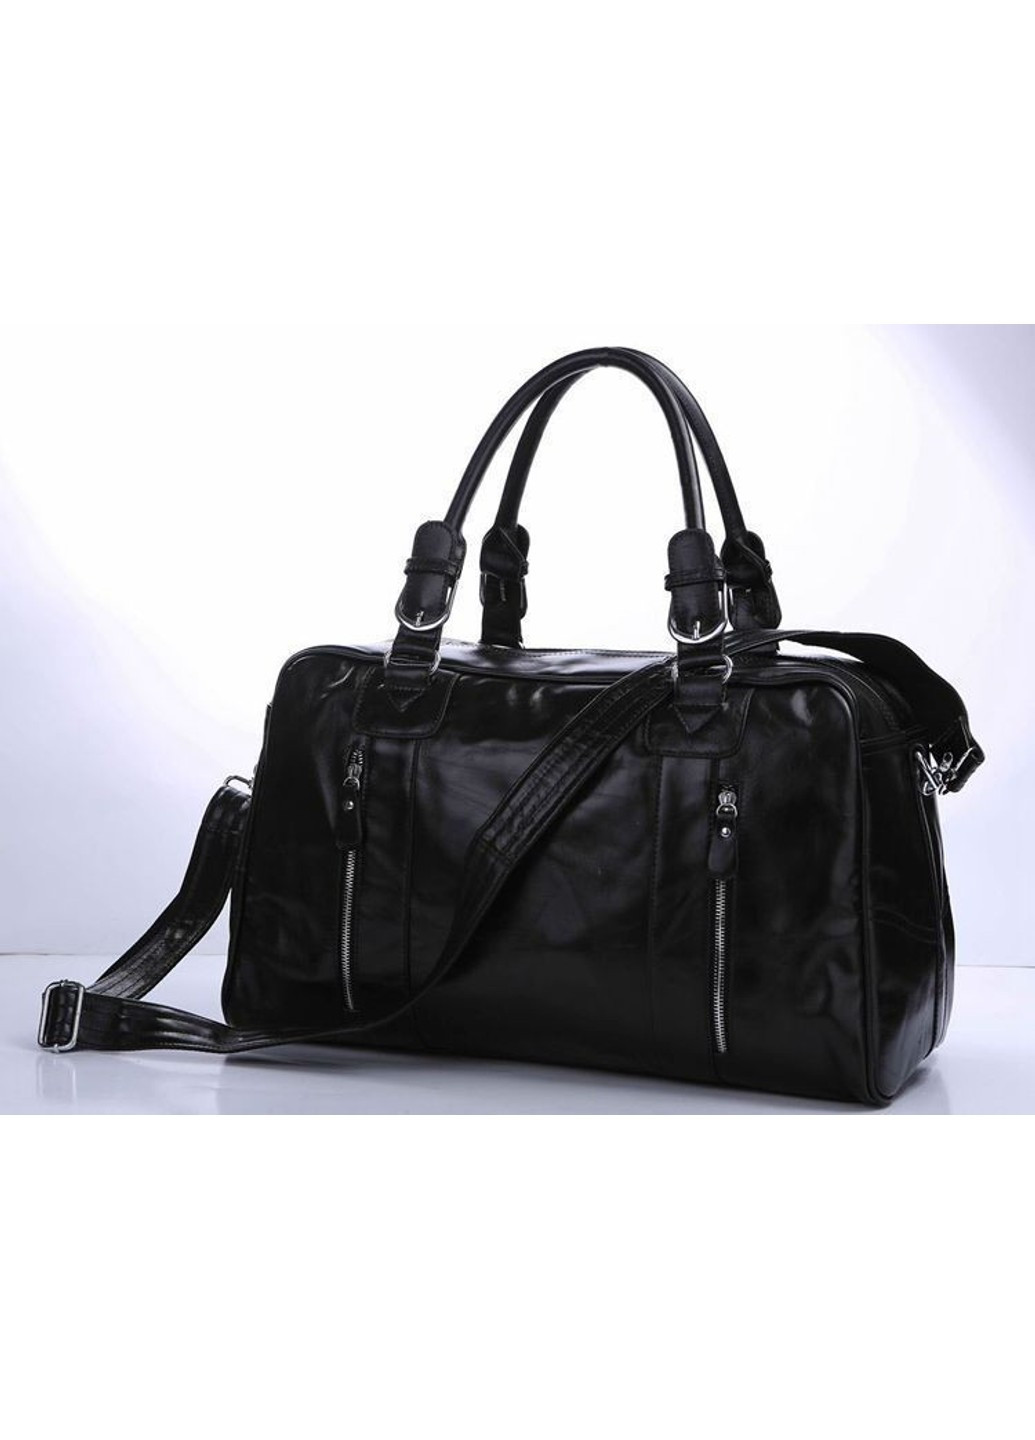 Мужская дорожная сумка 14135 кожаная Черная Vintage (271813525)